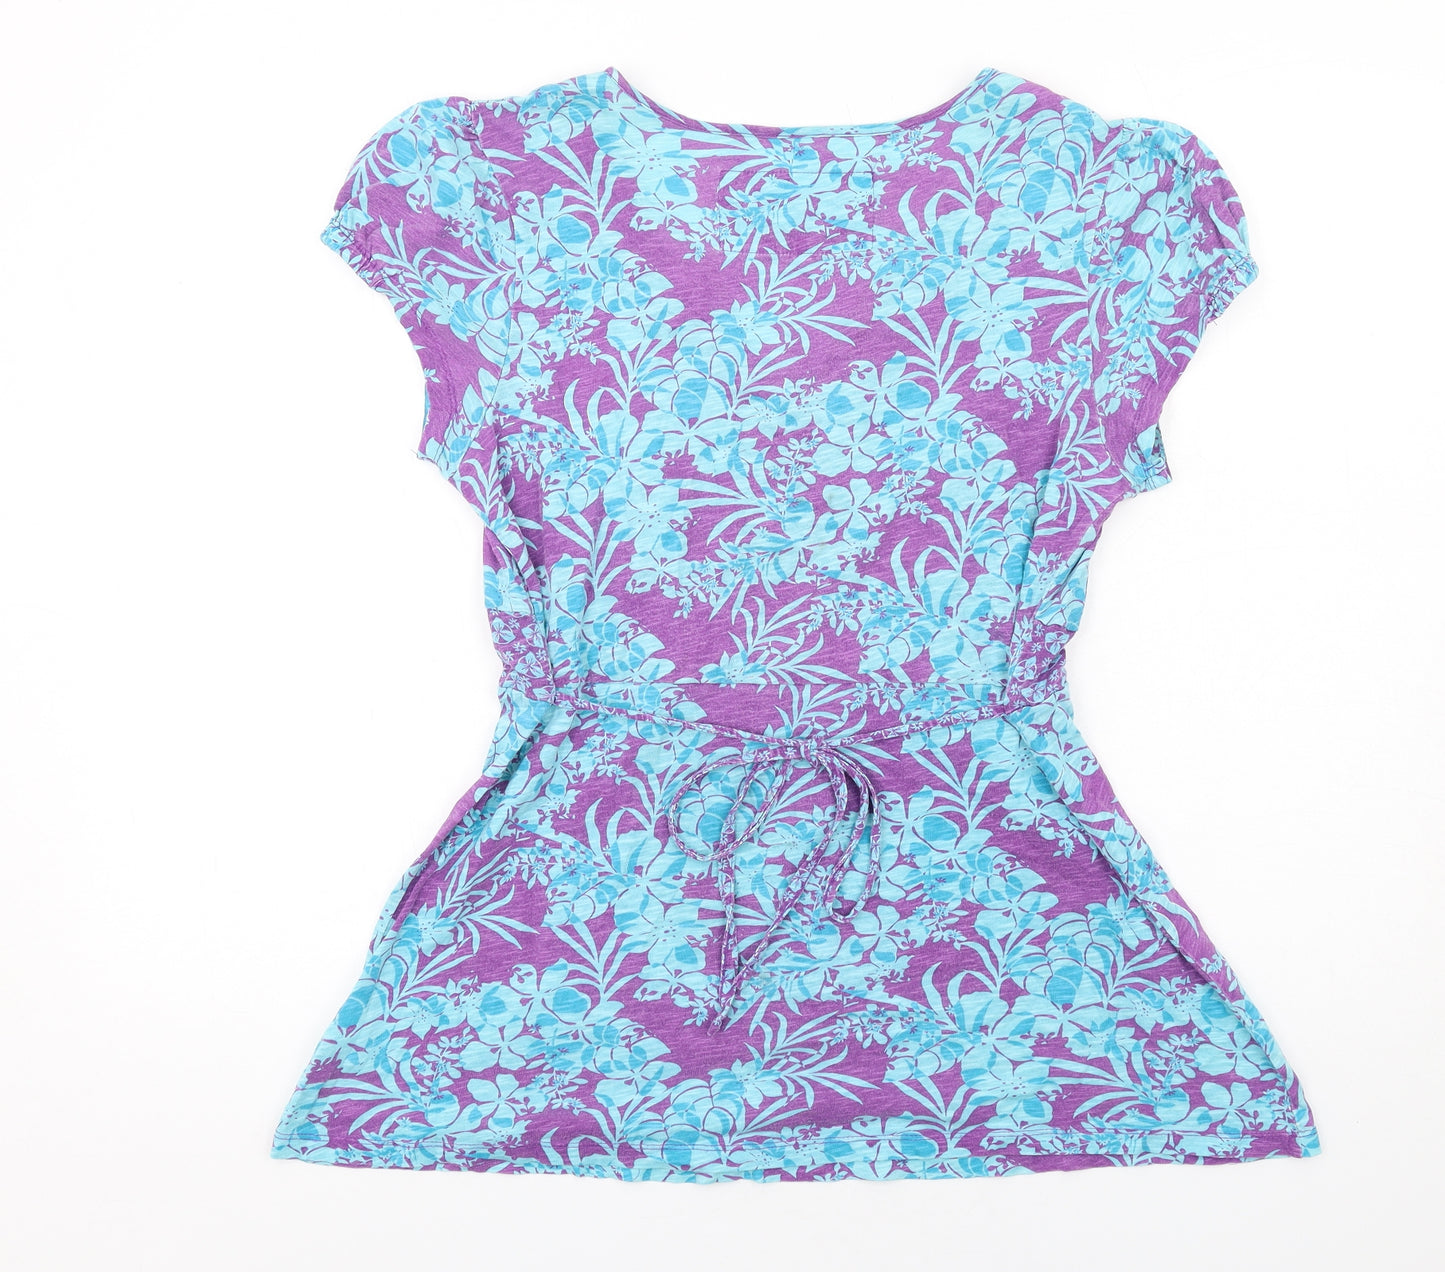 MANTARAY PRODUCTS Womens Multicoloured Geometric Cotton Basic T-Shirt Size 14 V-Neck - Leaf Print